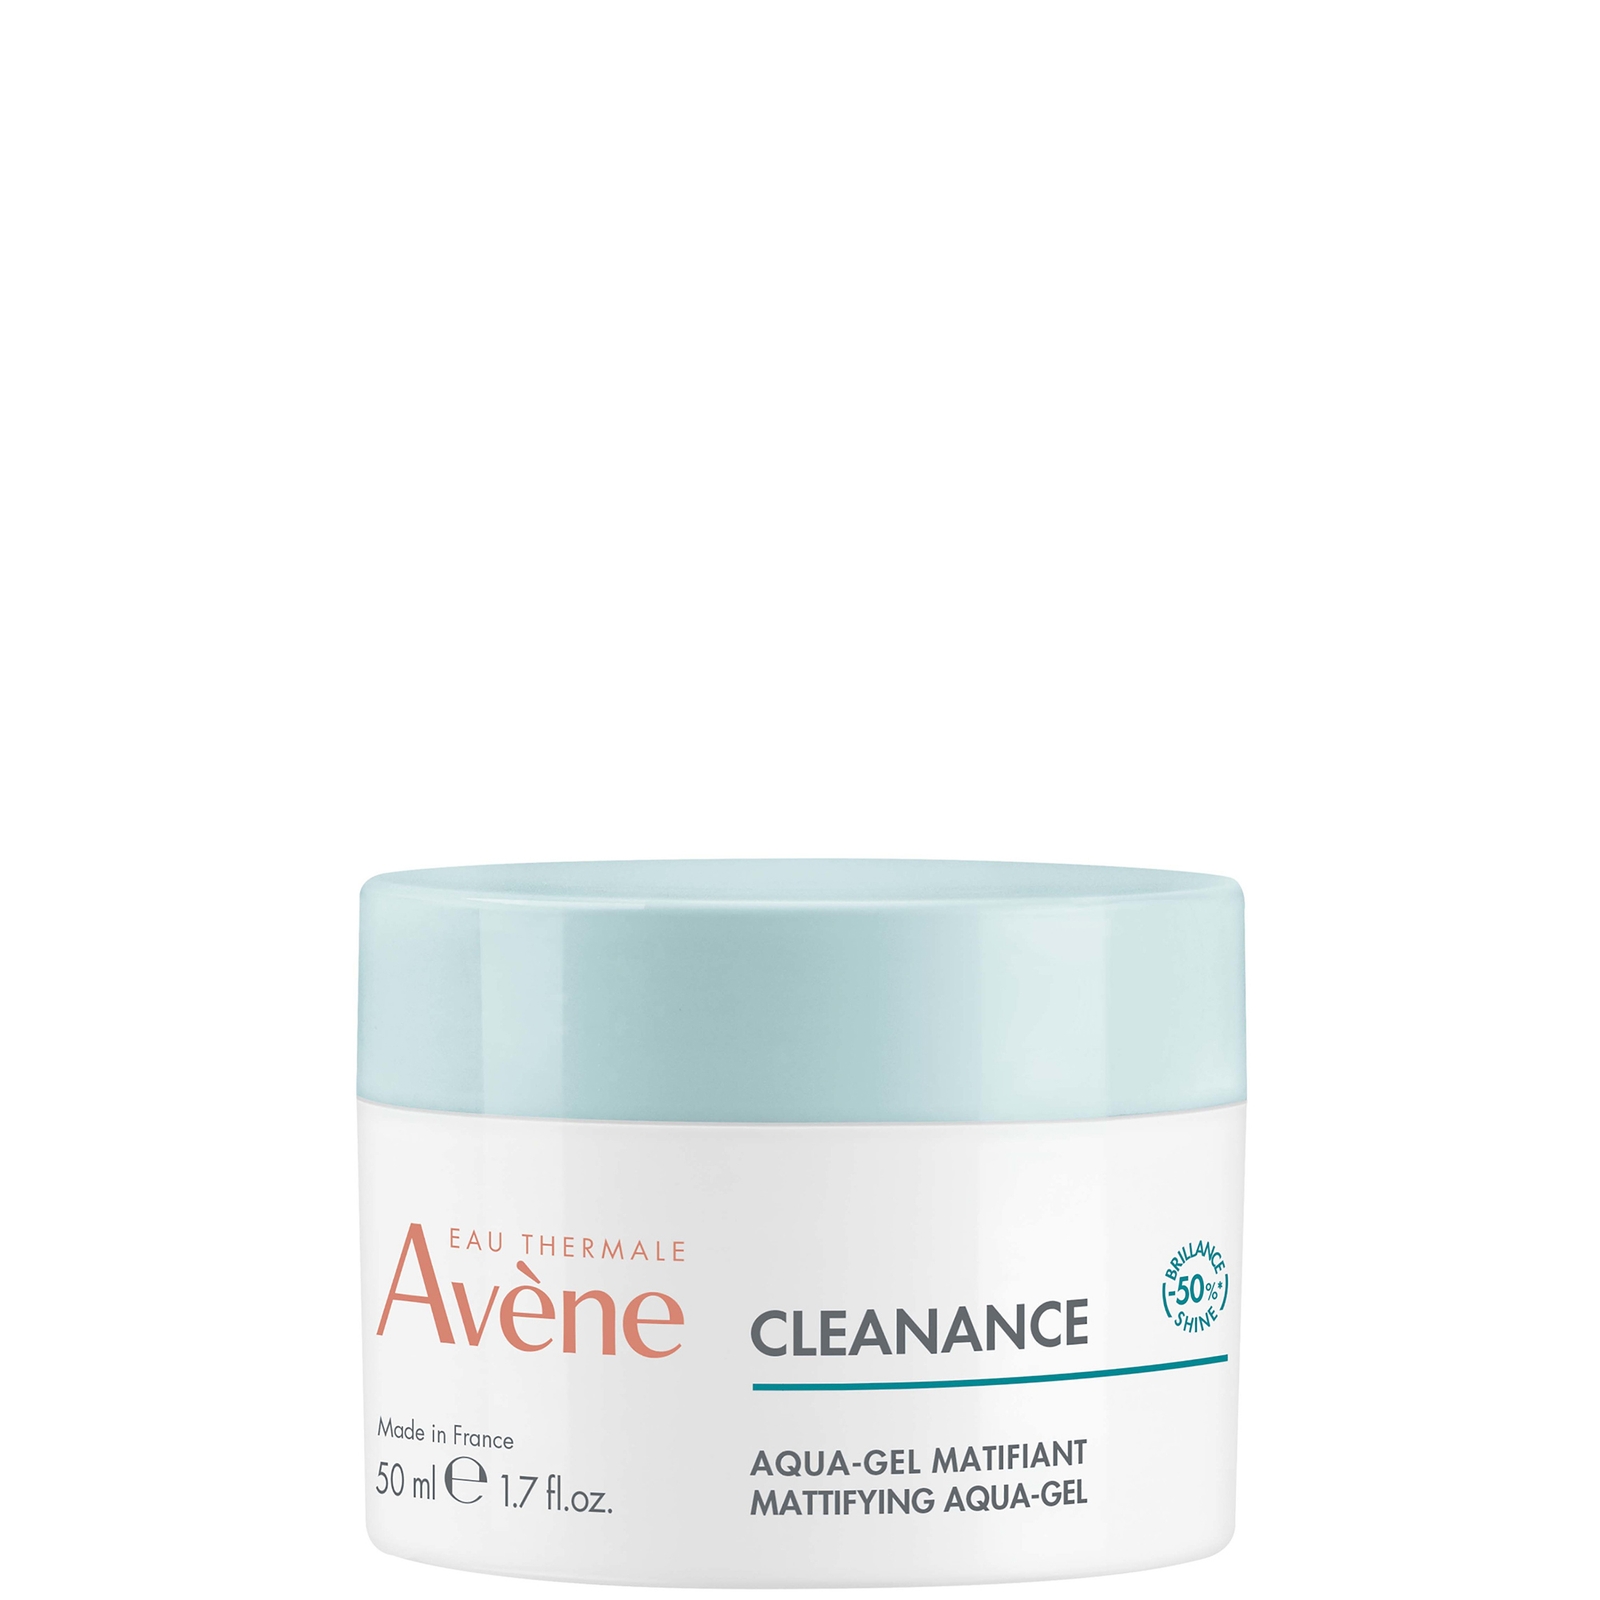 Avene Cleanance Mattifying Aqua-Gel 50ml